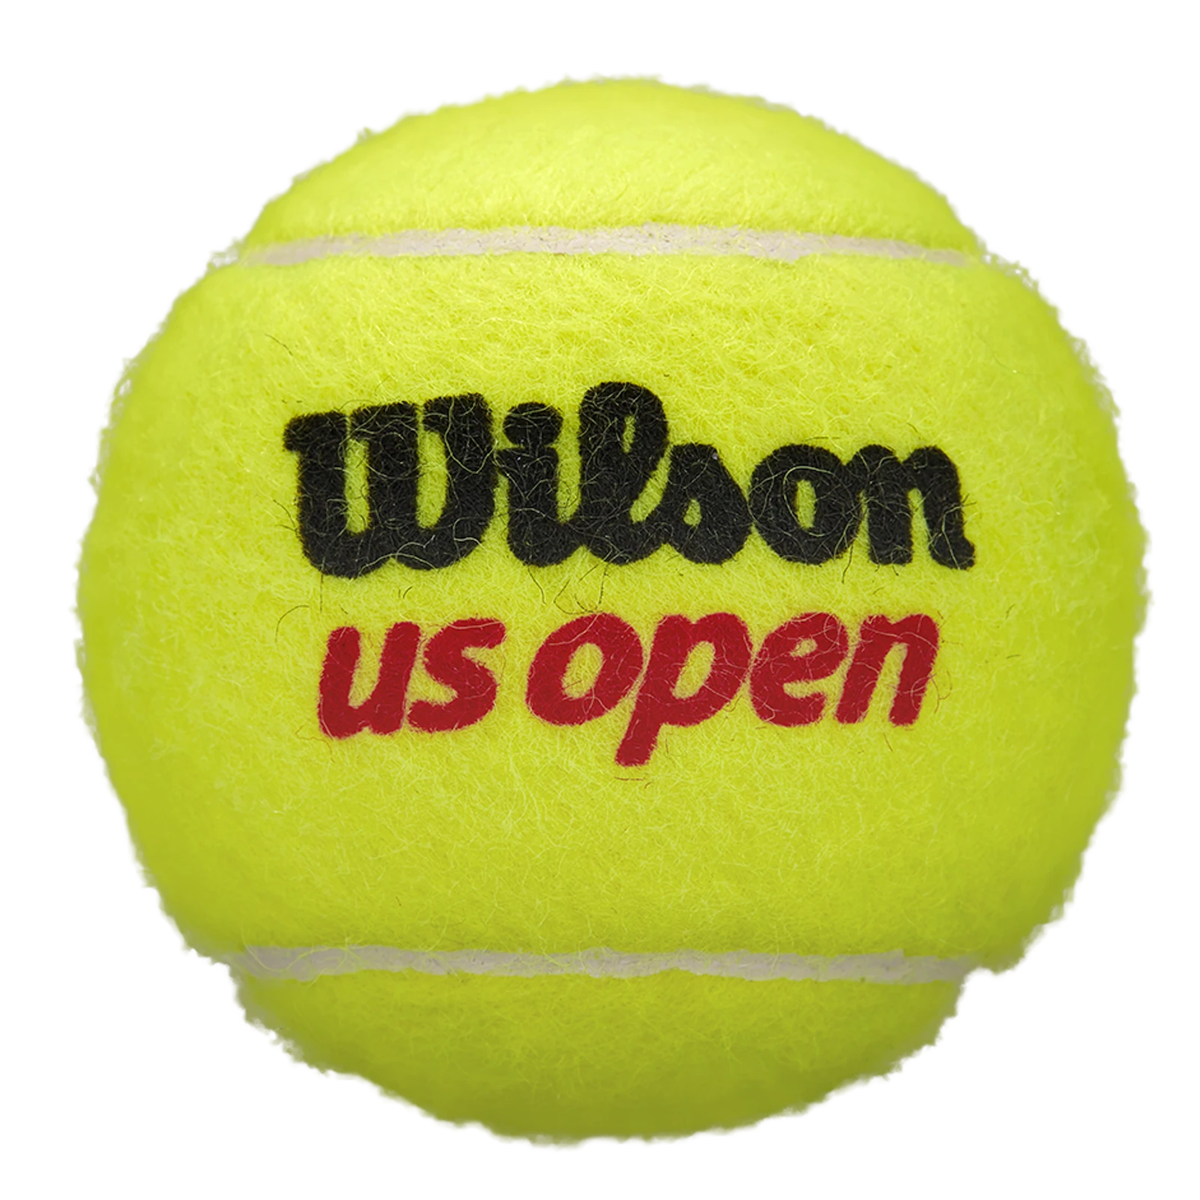 US Open Extra Duty Tennis Ball alternate view